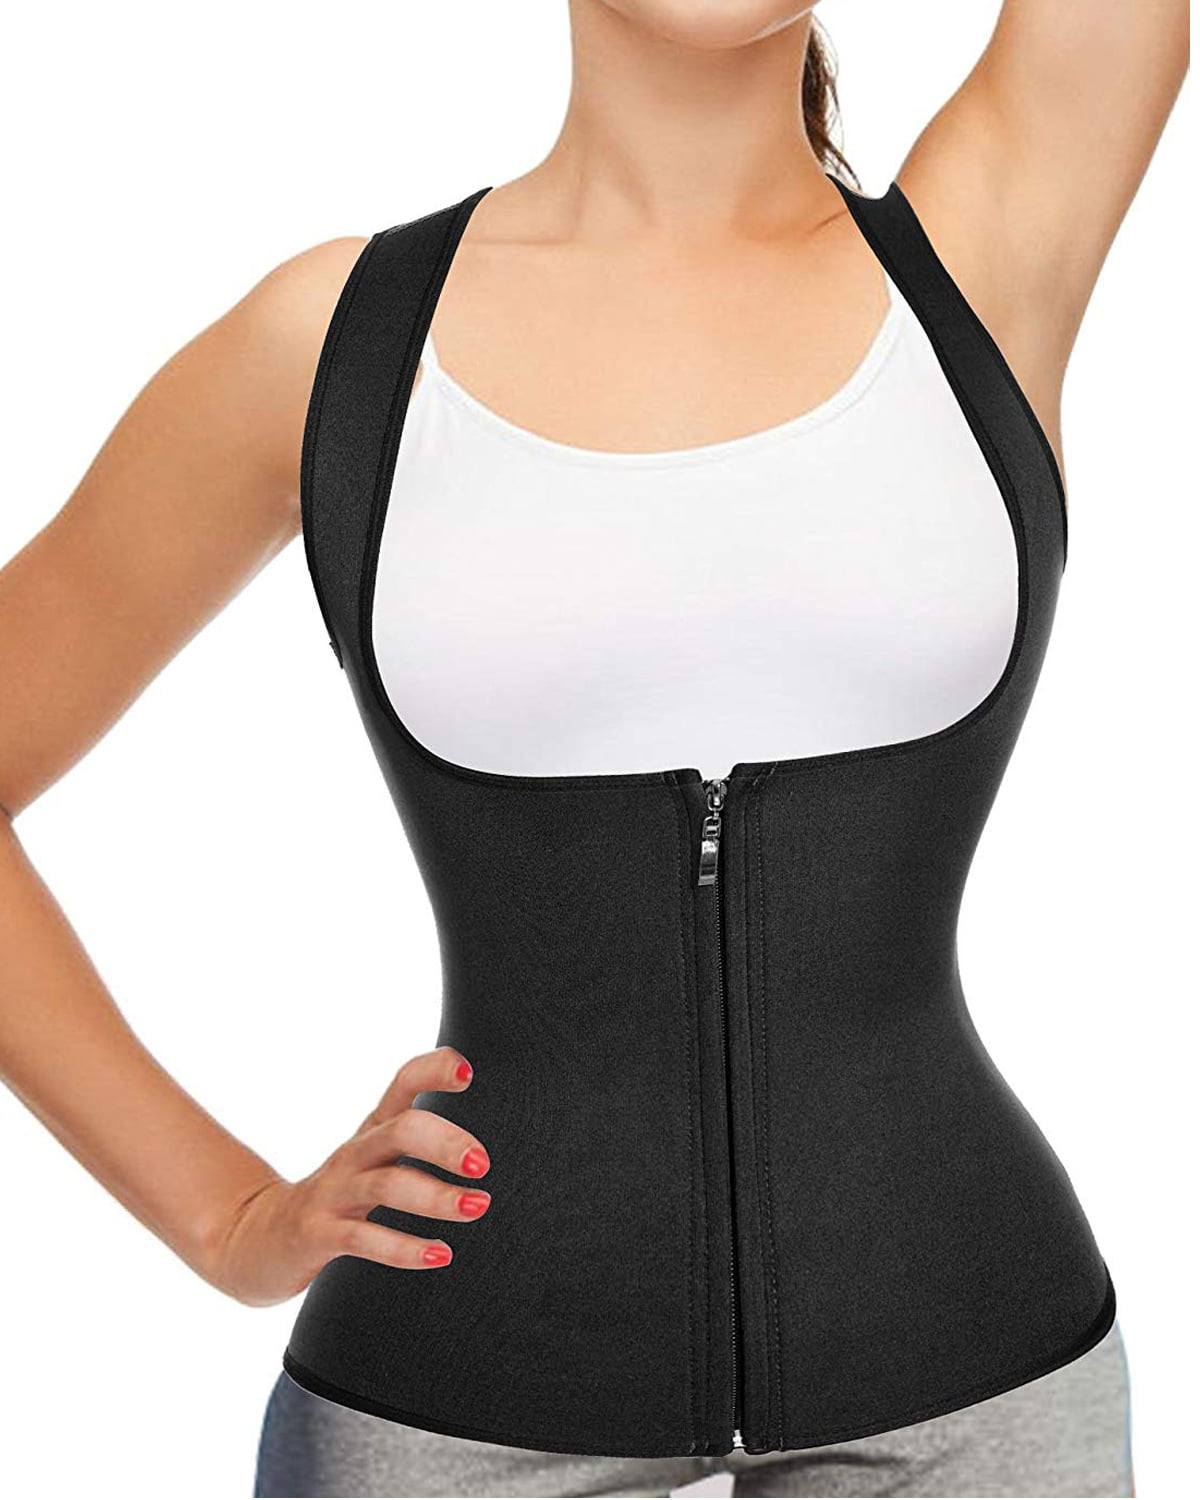 FORENJOY Women Sauna Suit Sweat Vest Neoprene Waist Trainer Corset for Weight Loss Velcro Belt Workout Tank Top